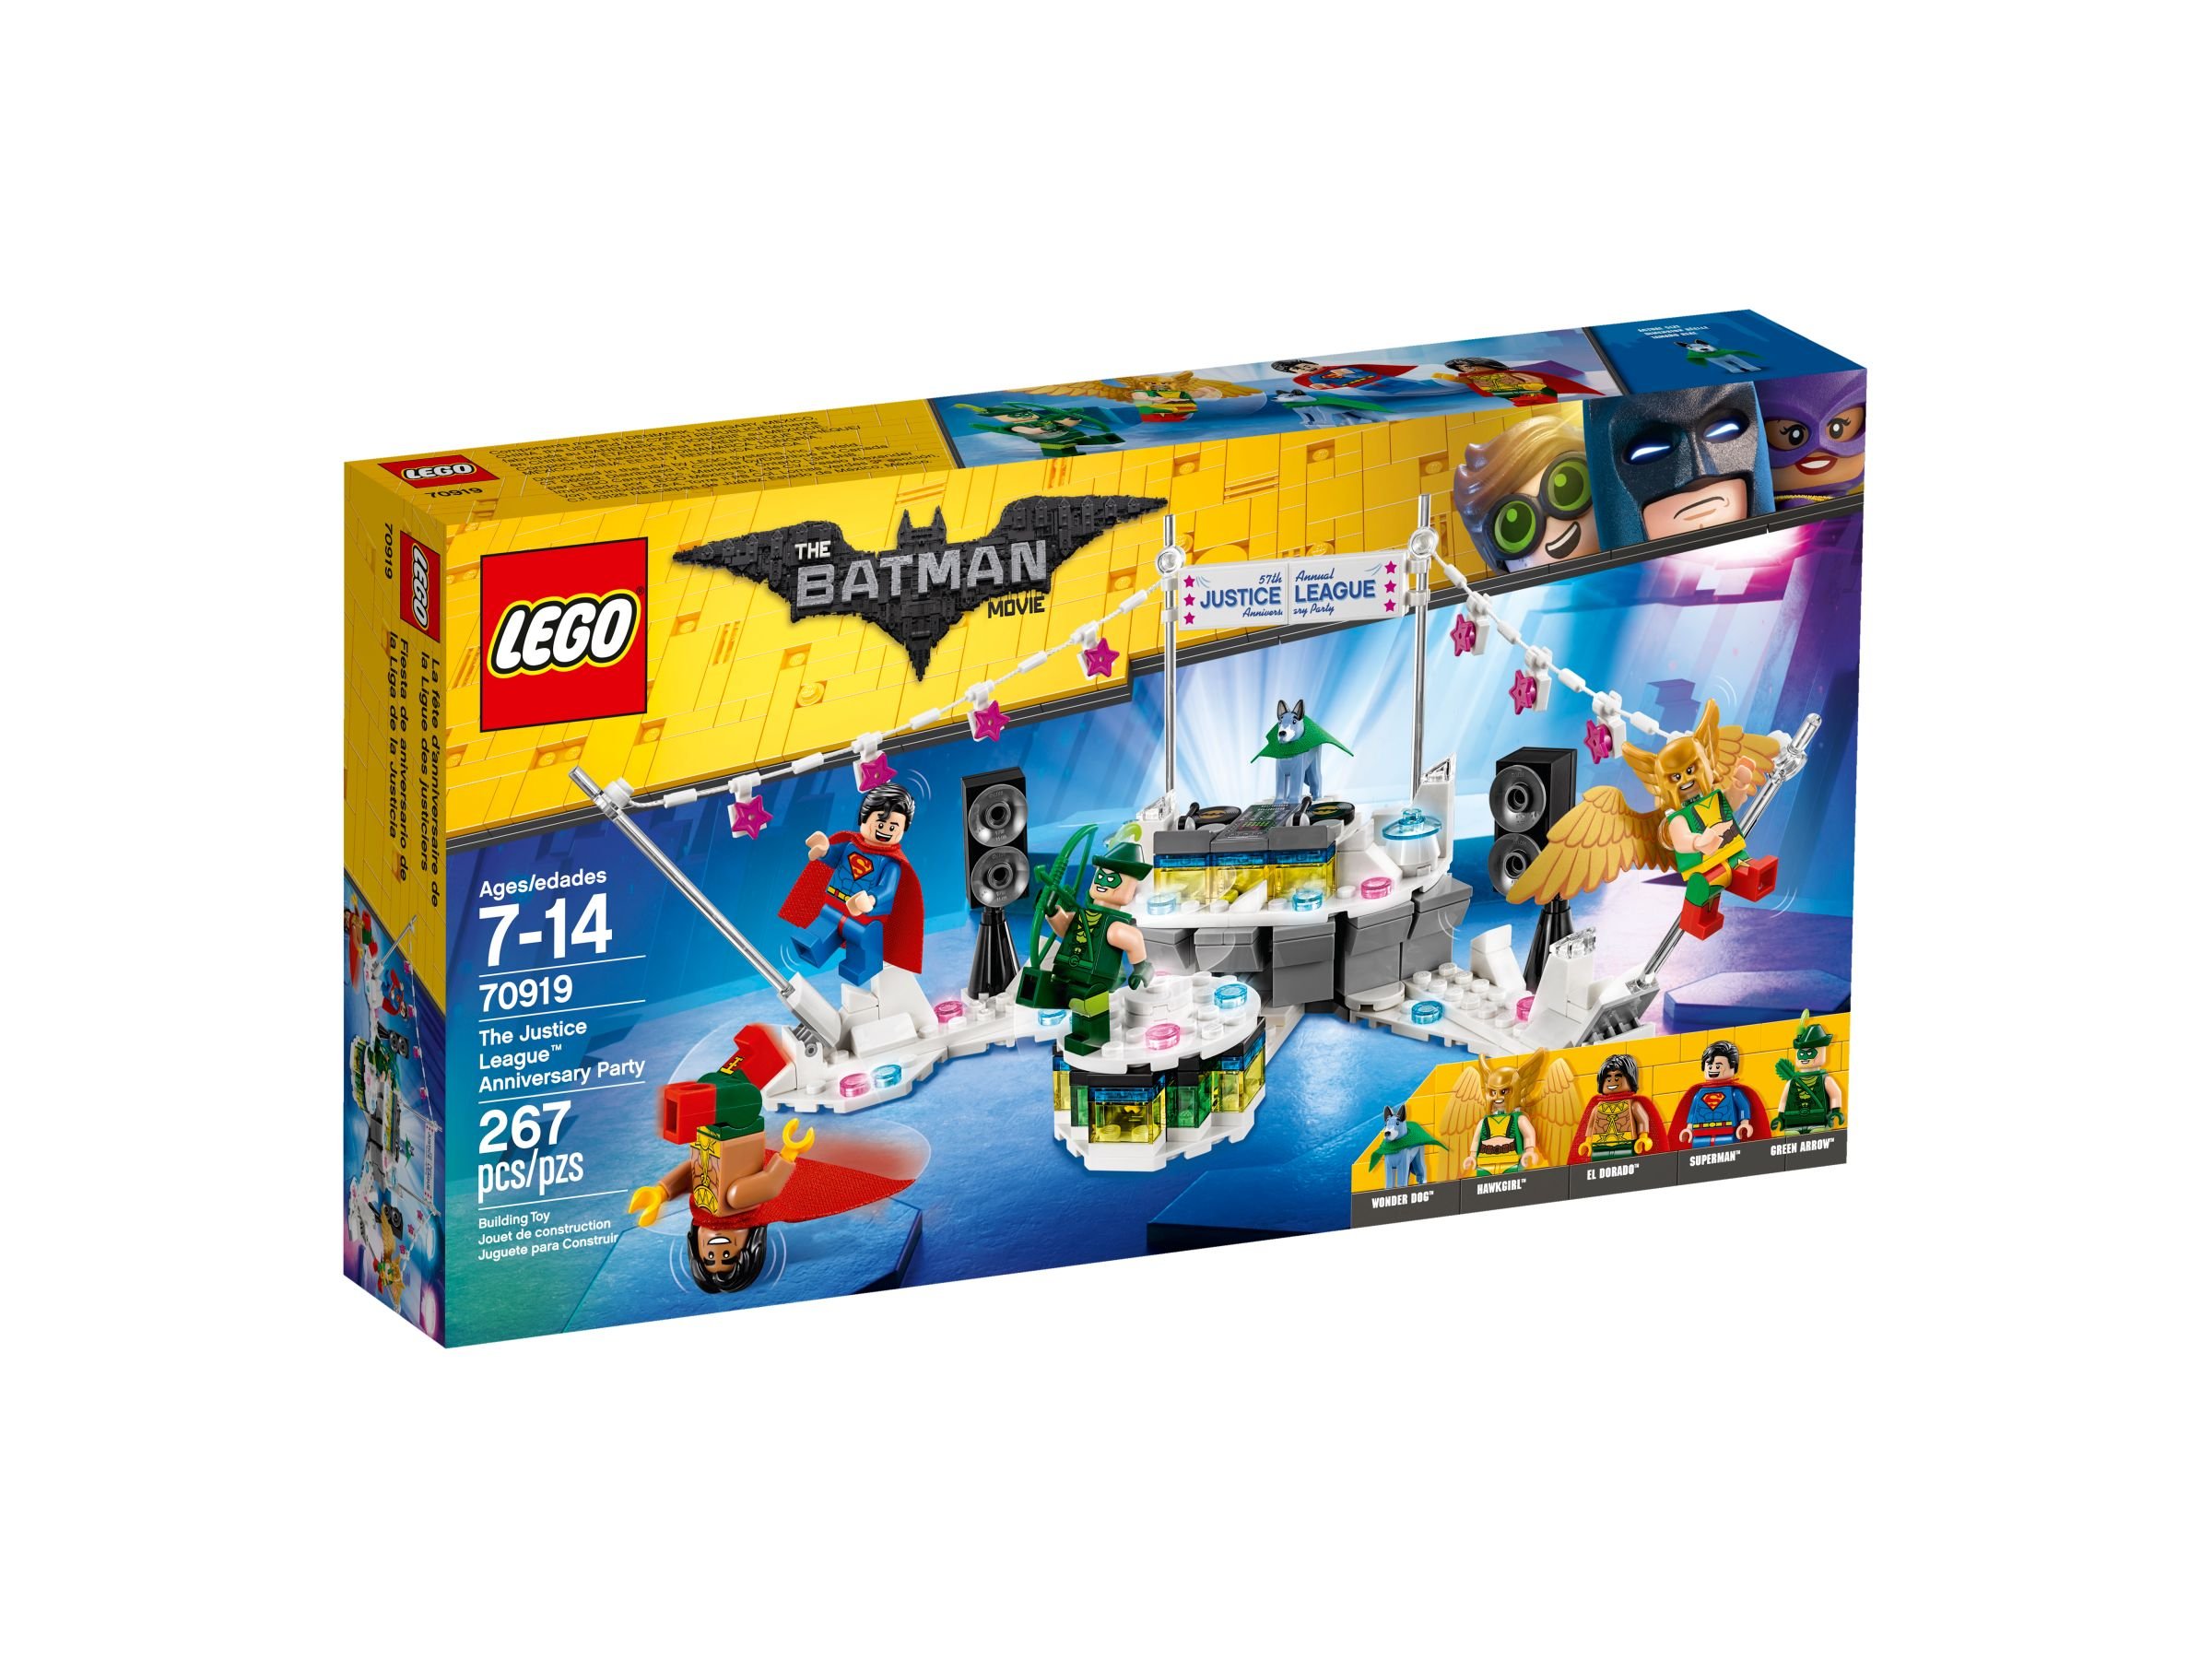 LEGO The LEGO Batman Movie 70919 The Justice League Anniversary Party LEGO_70919_alt1.jpg